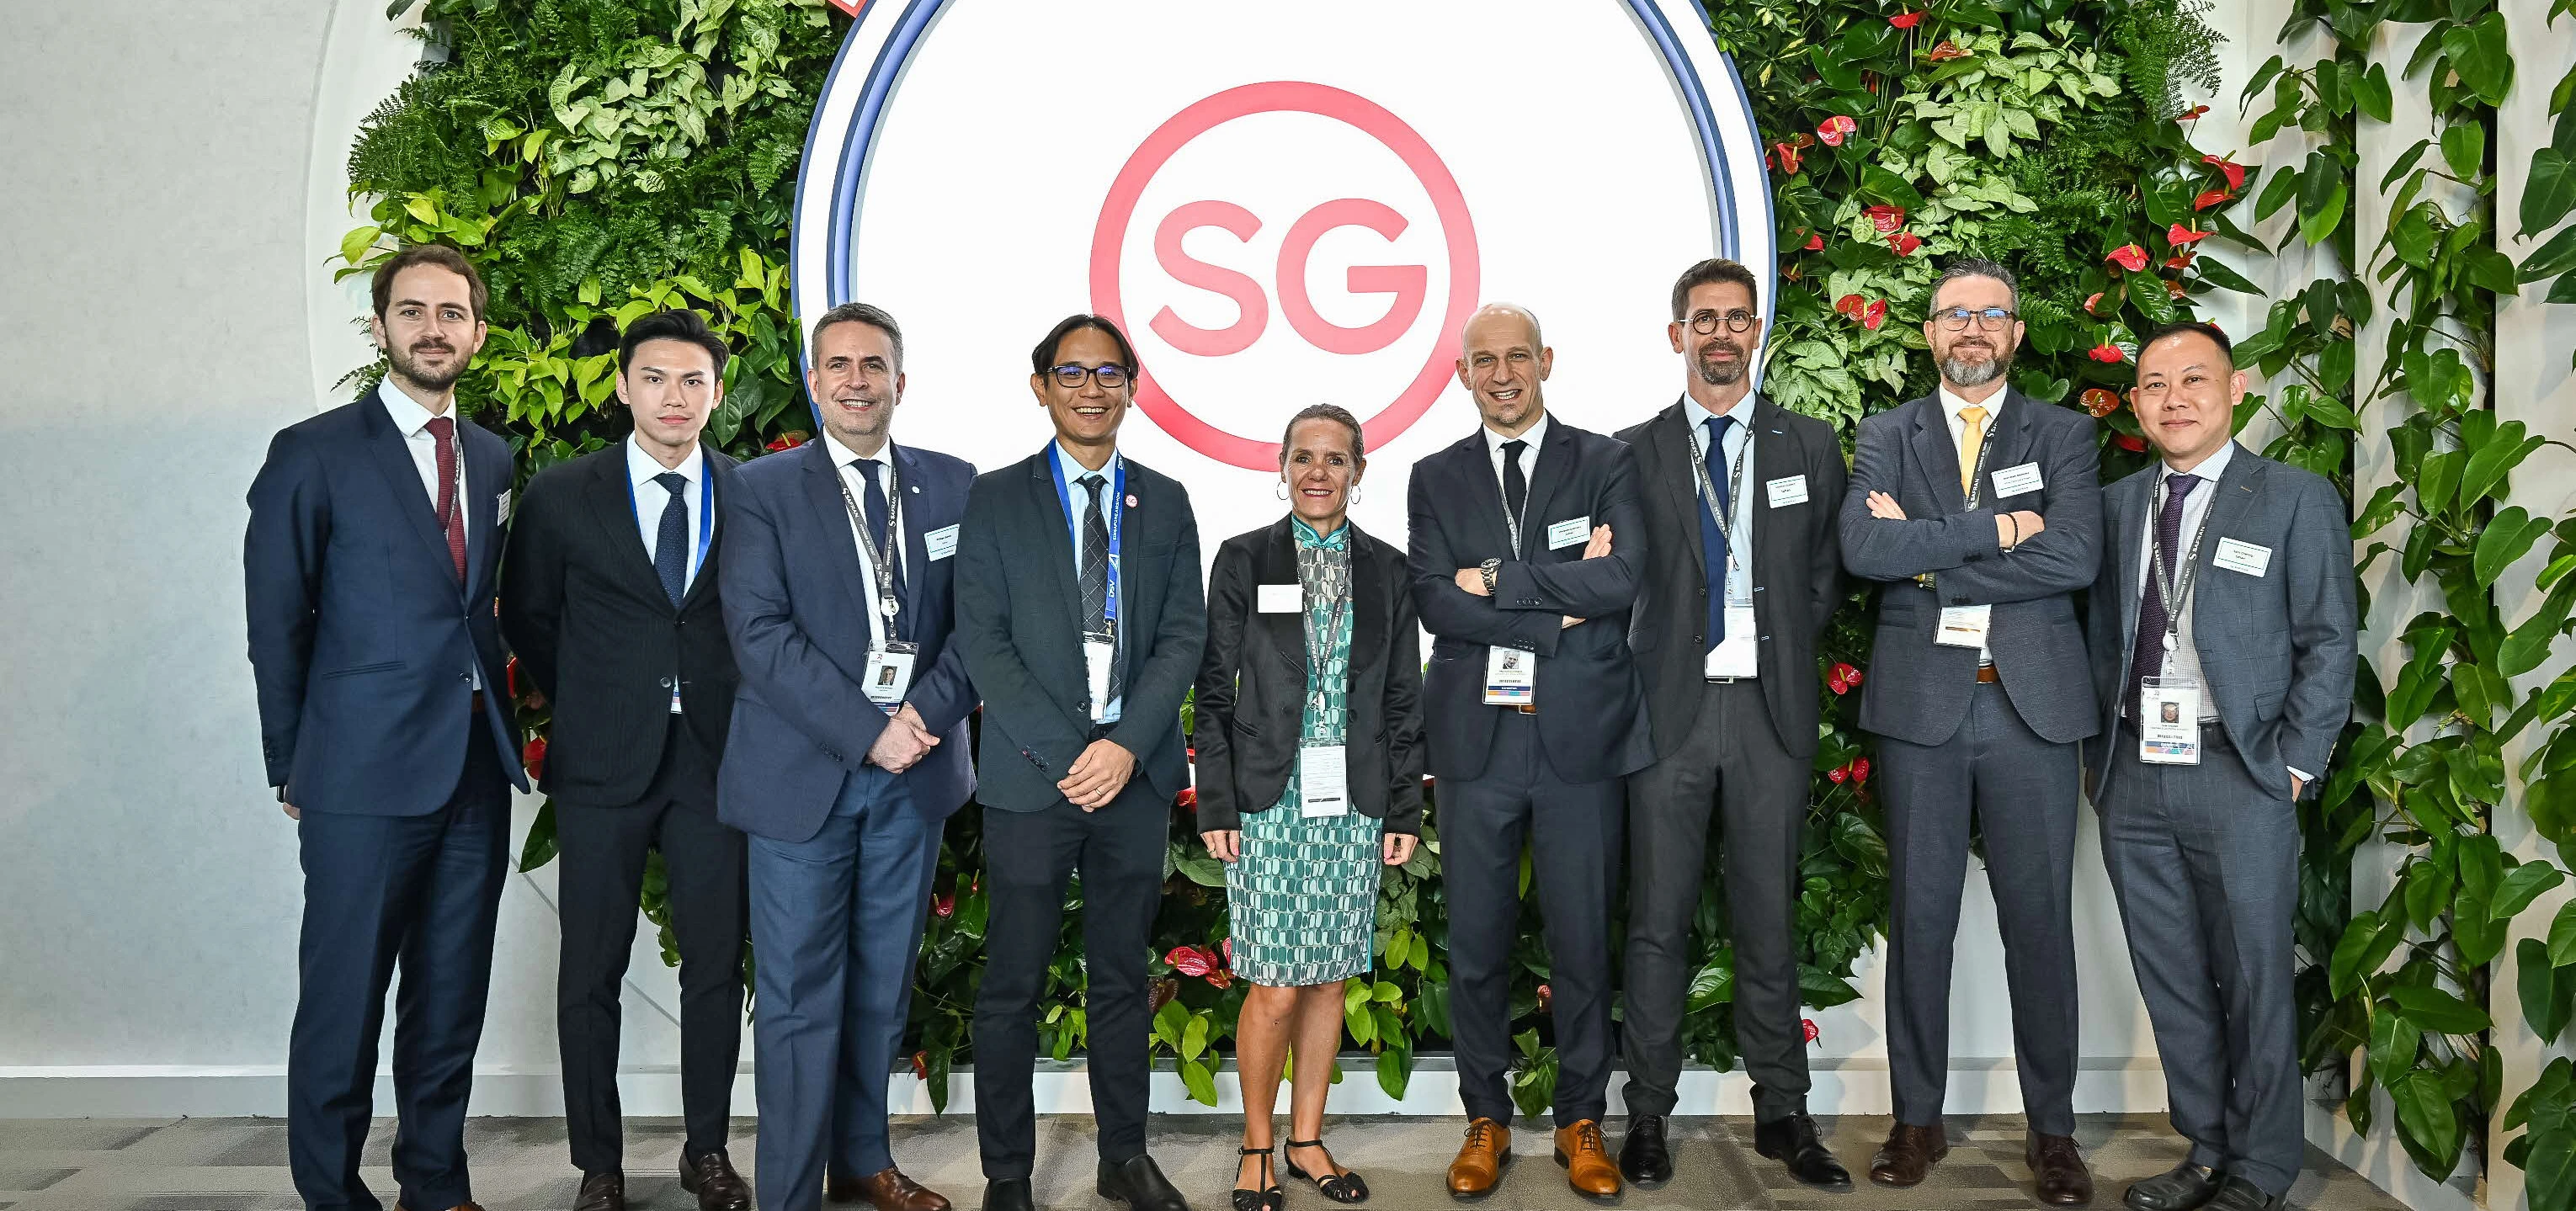 Safran expands footprint in Singapore